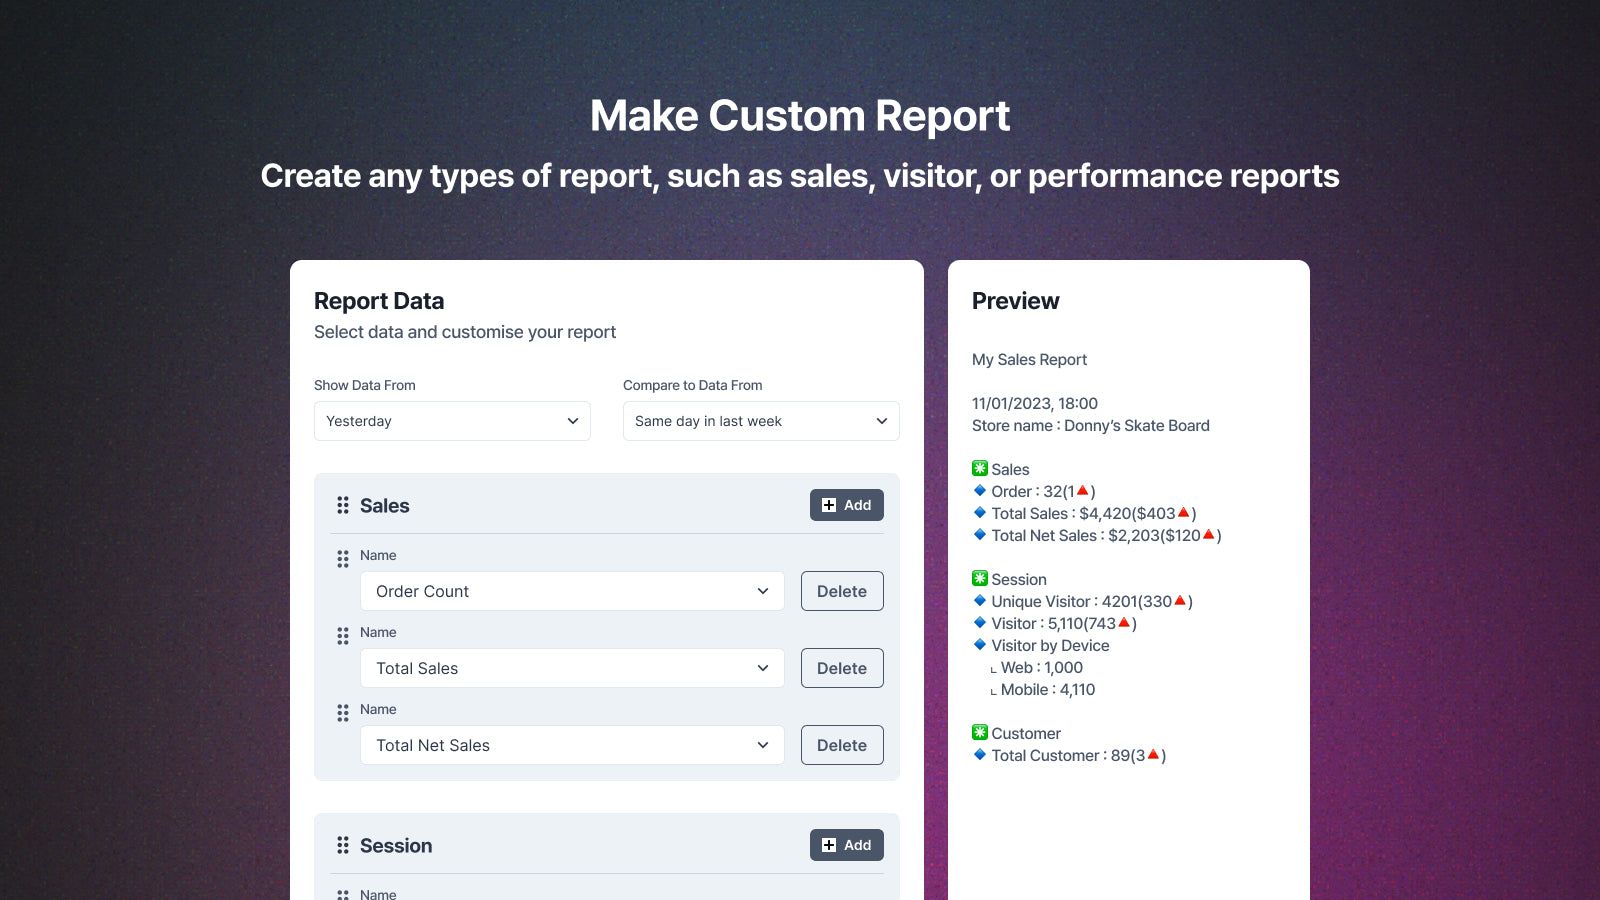 Make custom report